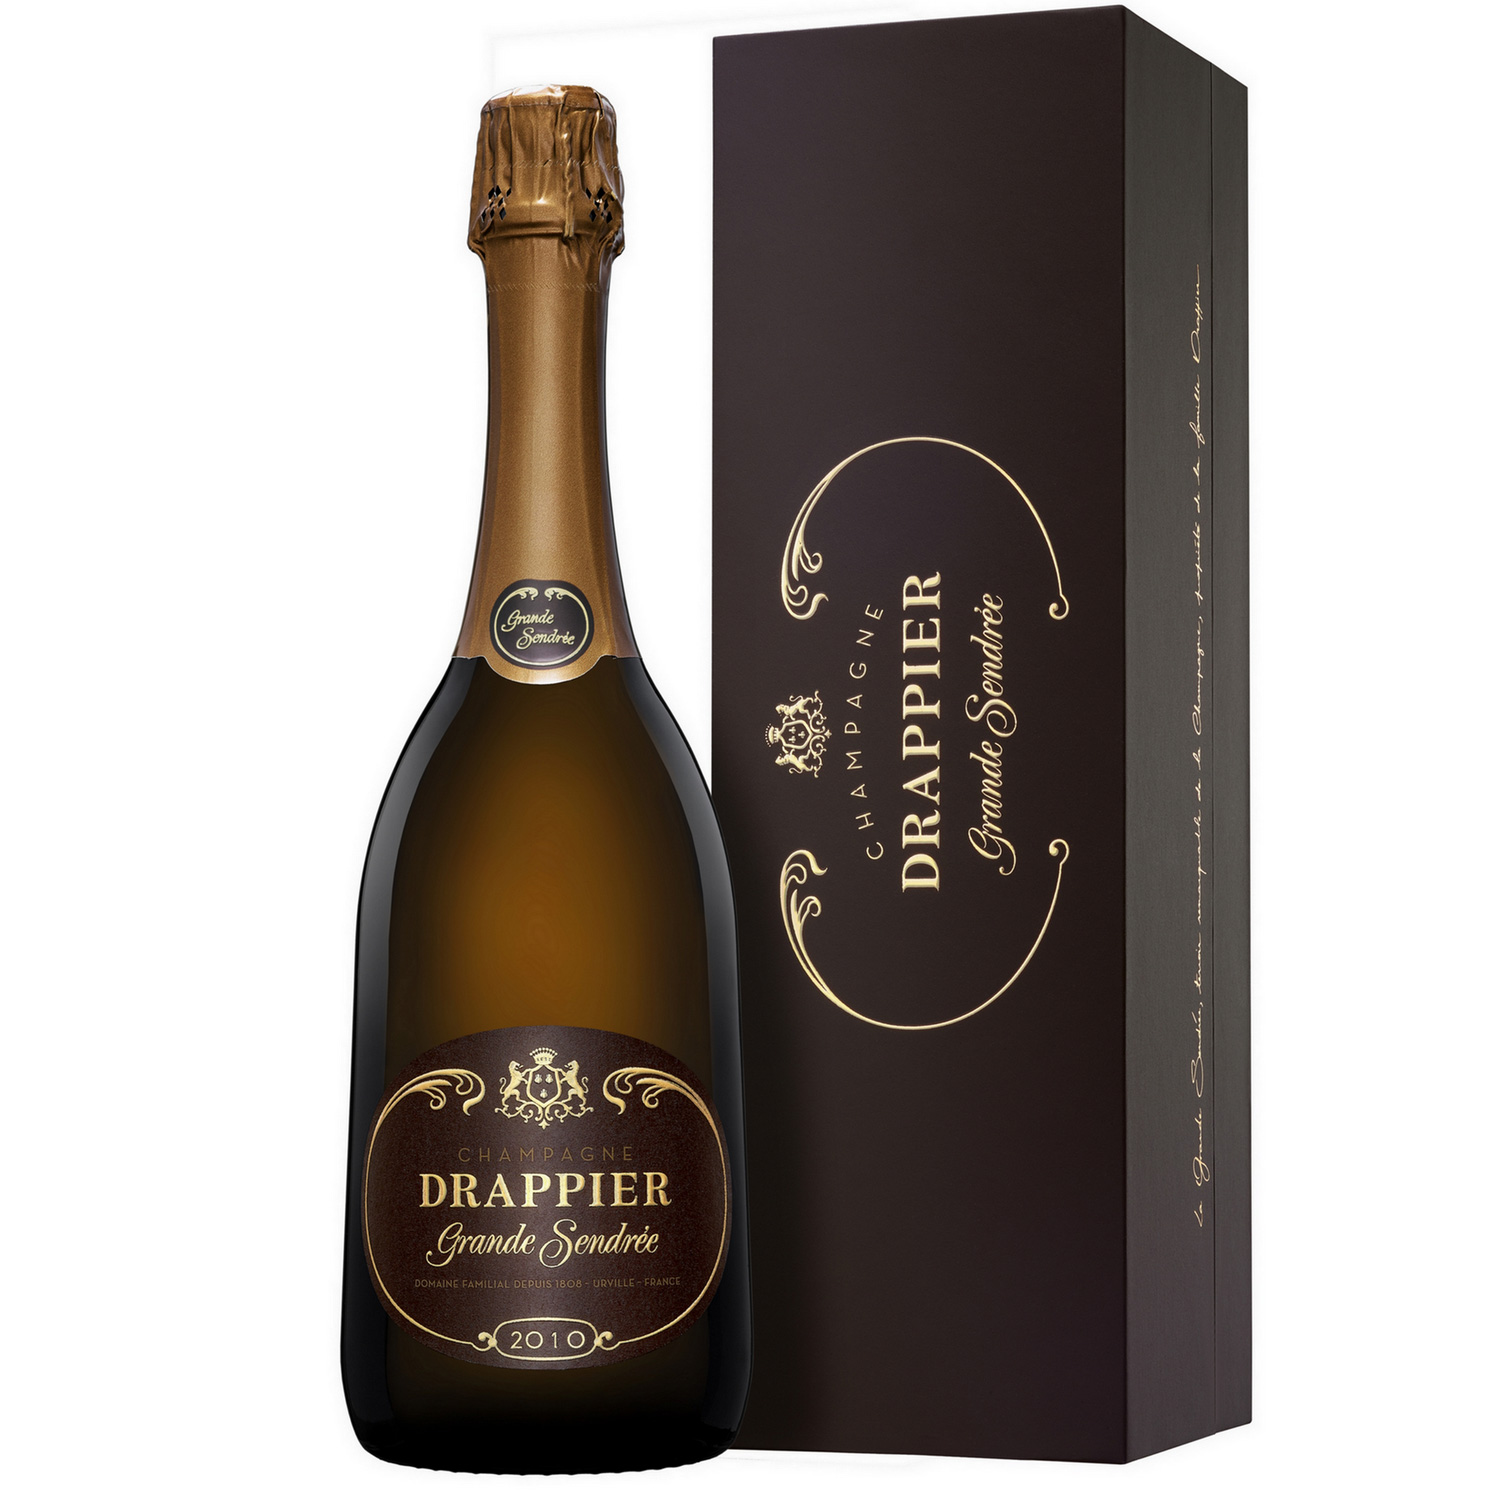 Champagne Drappier: Grande Sendrée 2010